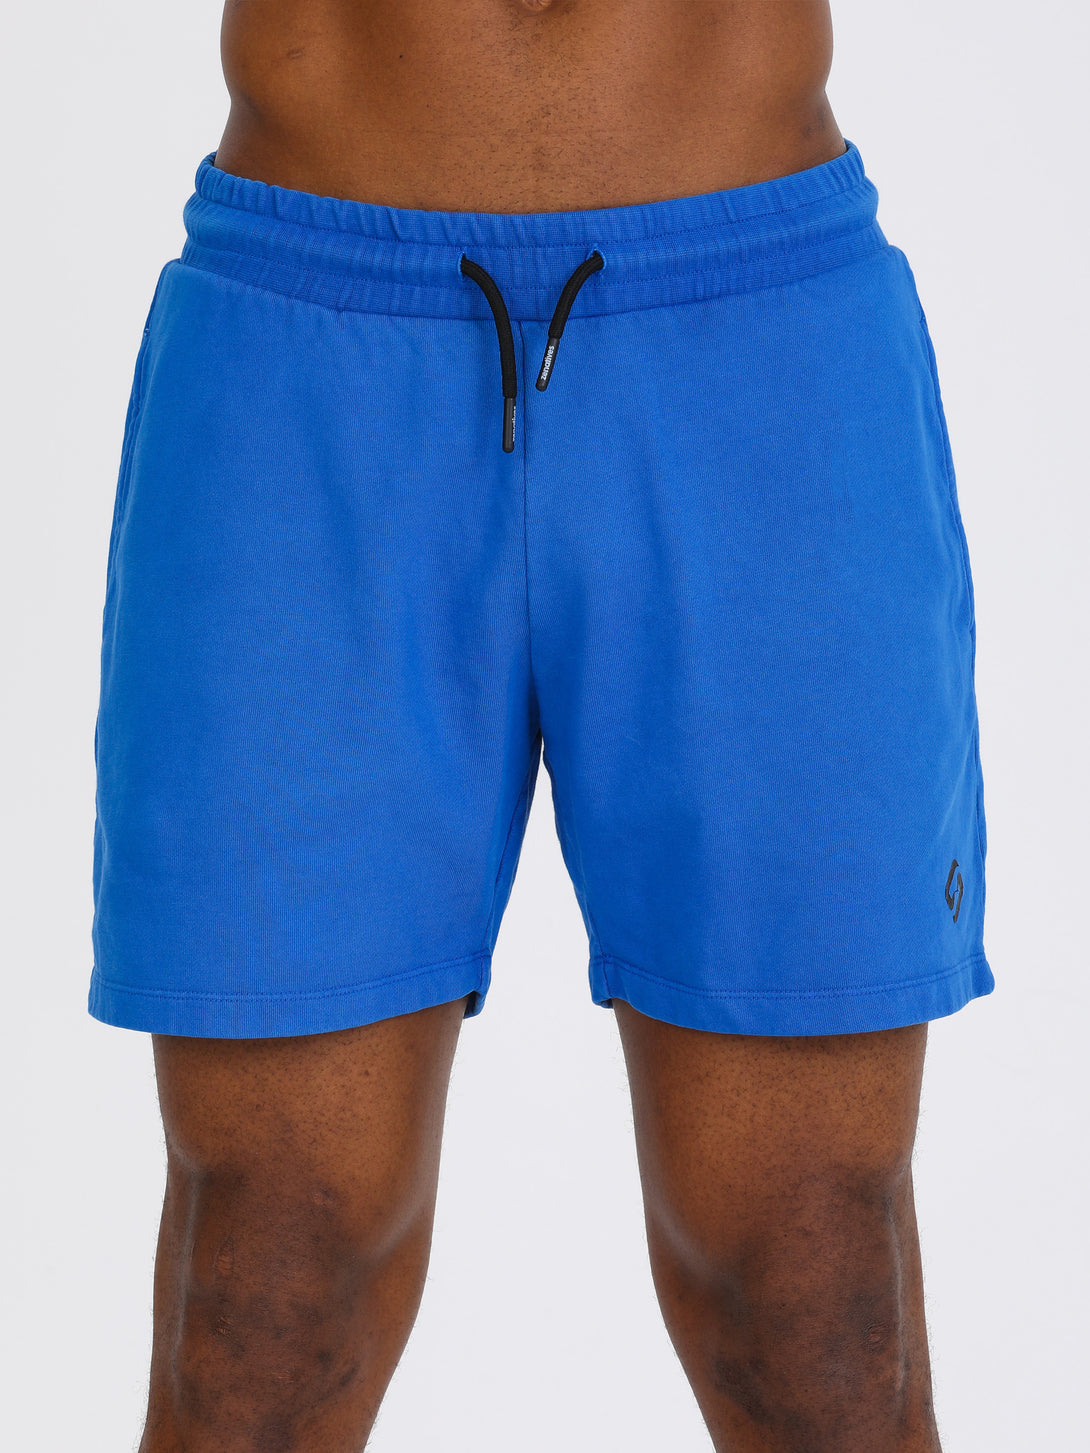 A Man Wearing Lapis Blue Color Essential Mens Workout Shorts